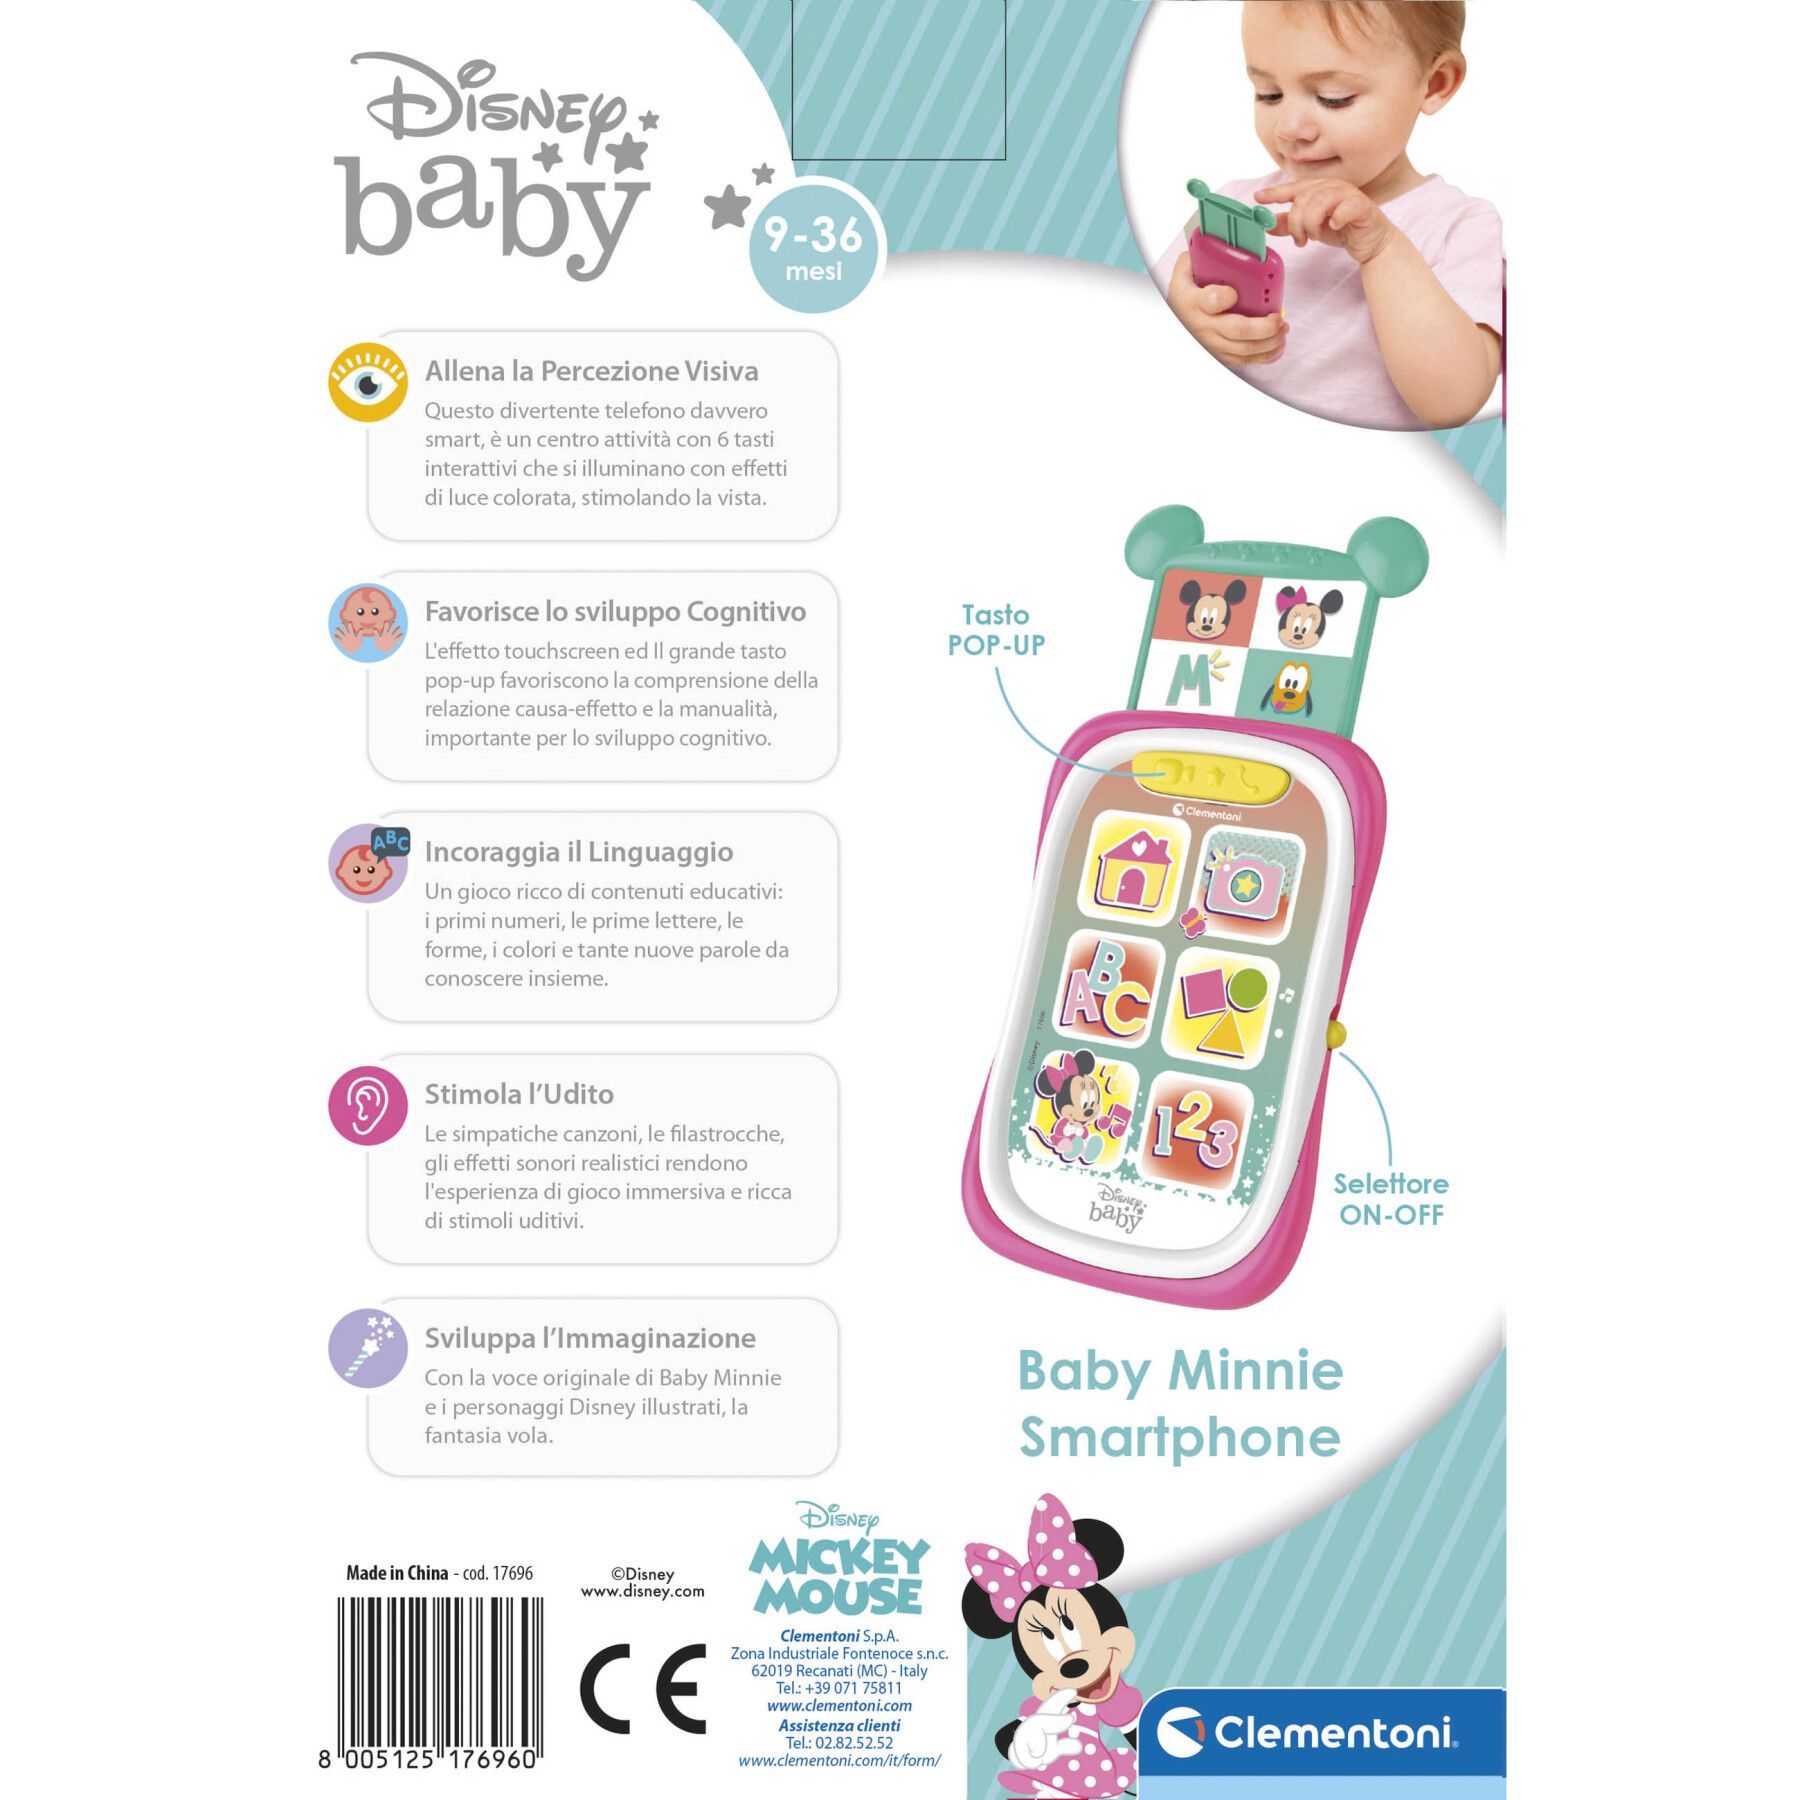 Clementoni - disney baby minnie smartphone, telefono interattivo - Minnie